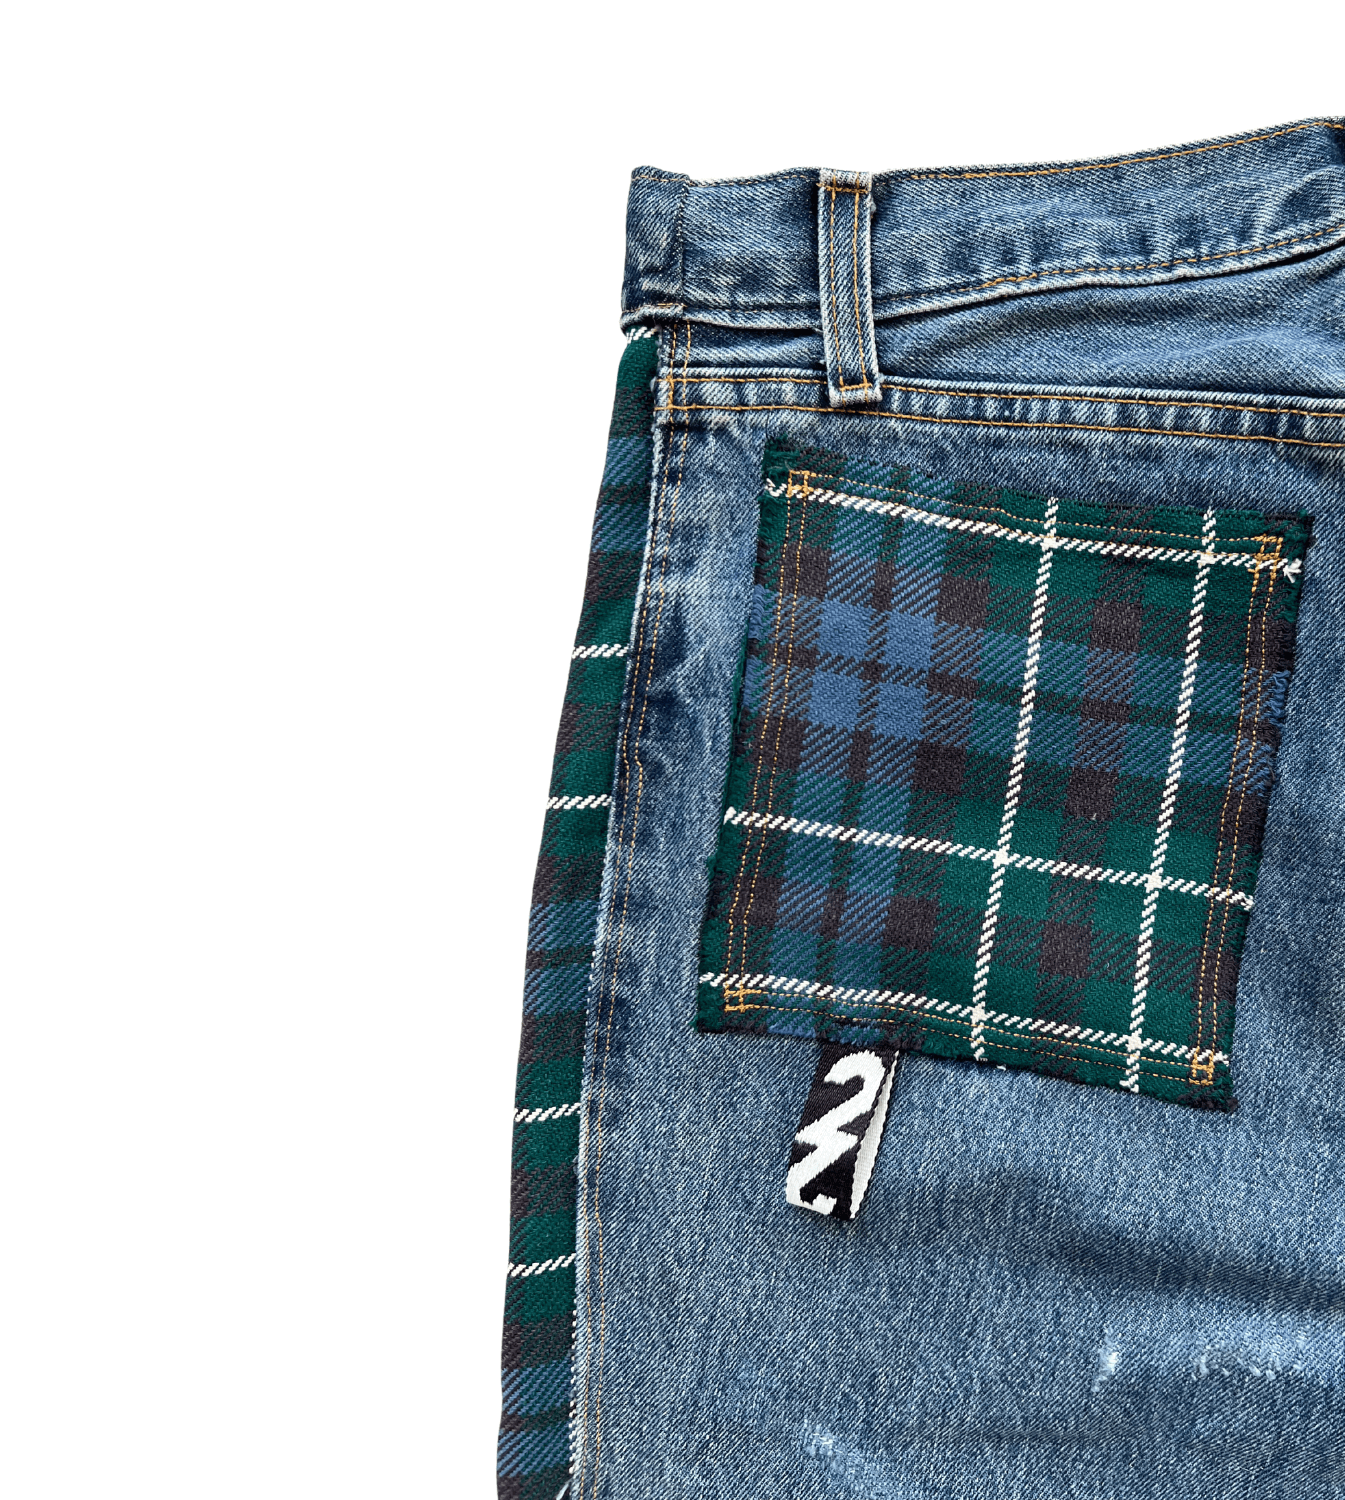 jeans-levis-rework-madeindijon-artisanat-poche-details